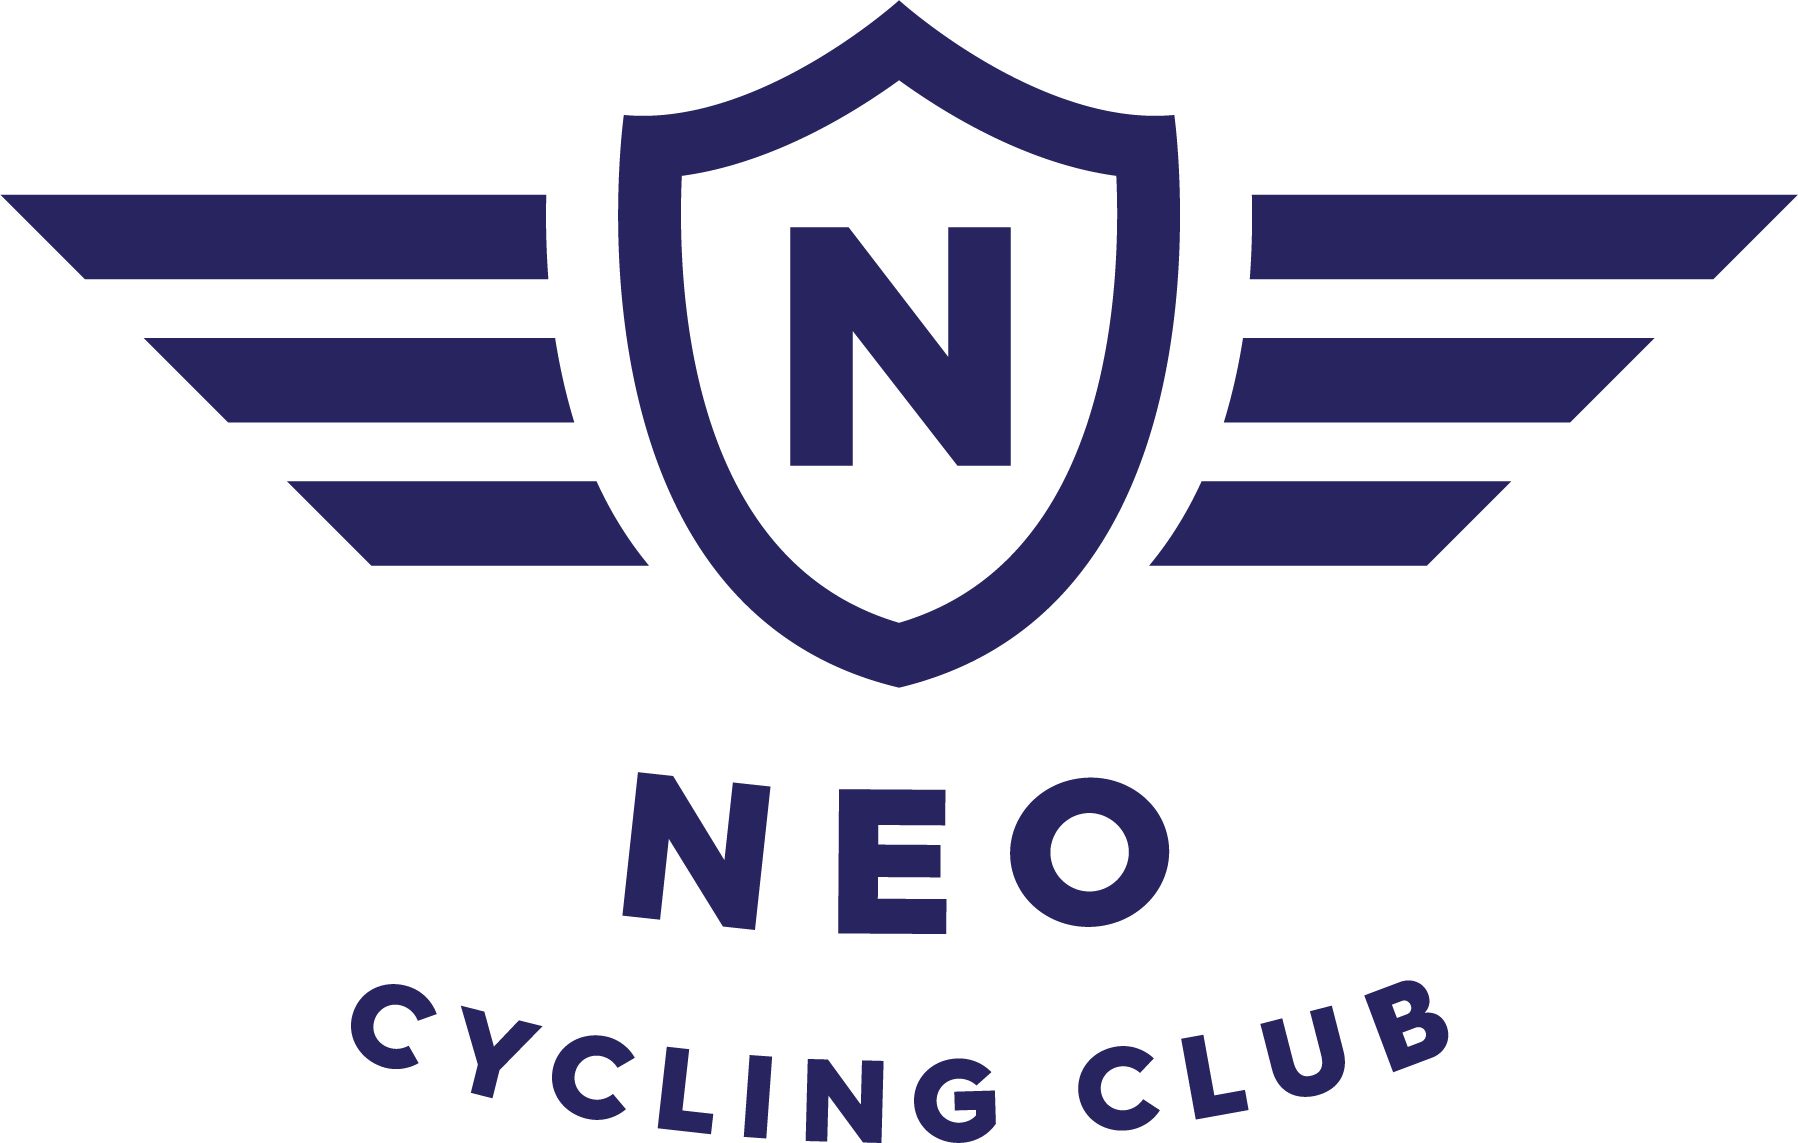 Neo Cycling Club